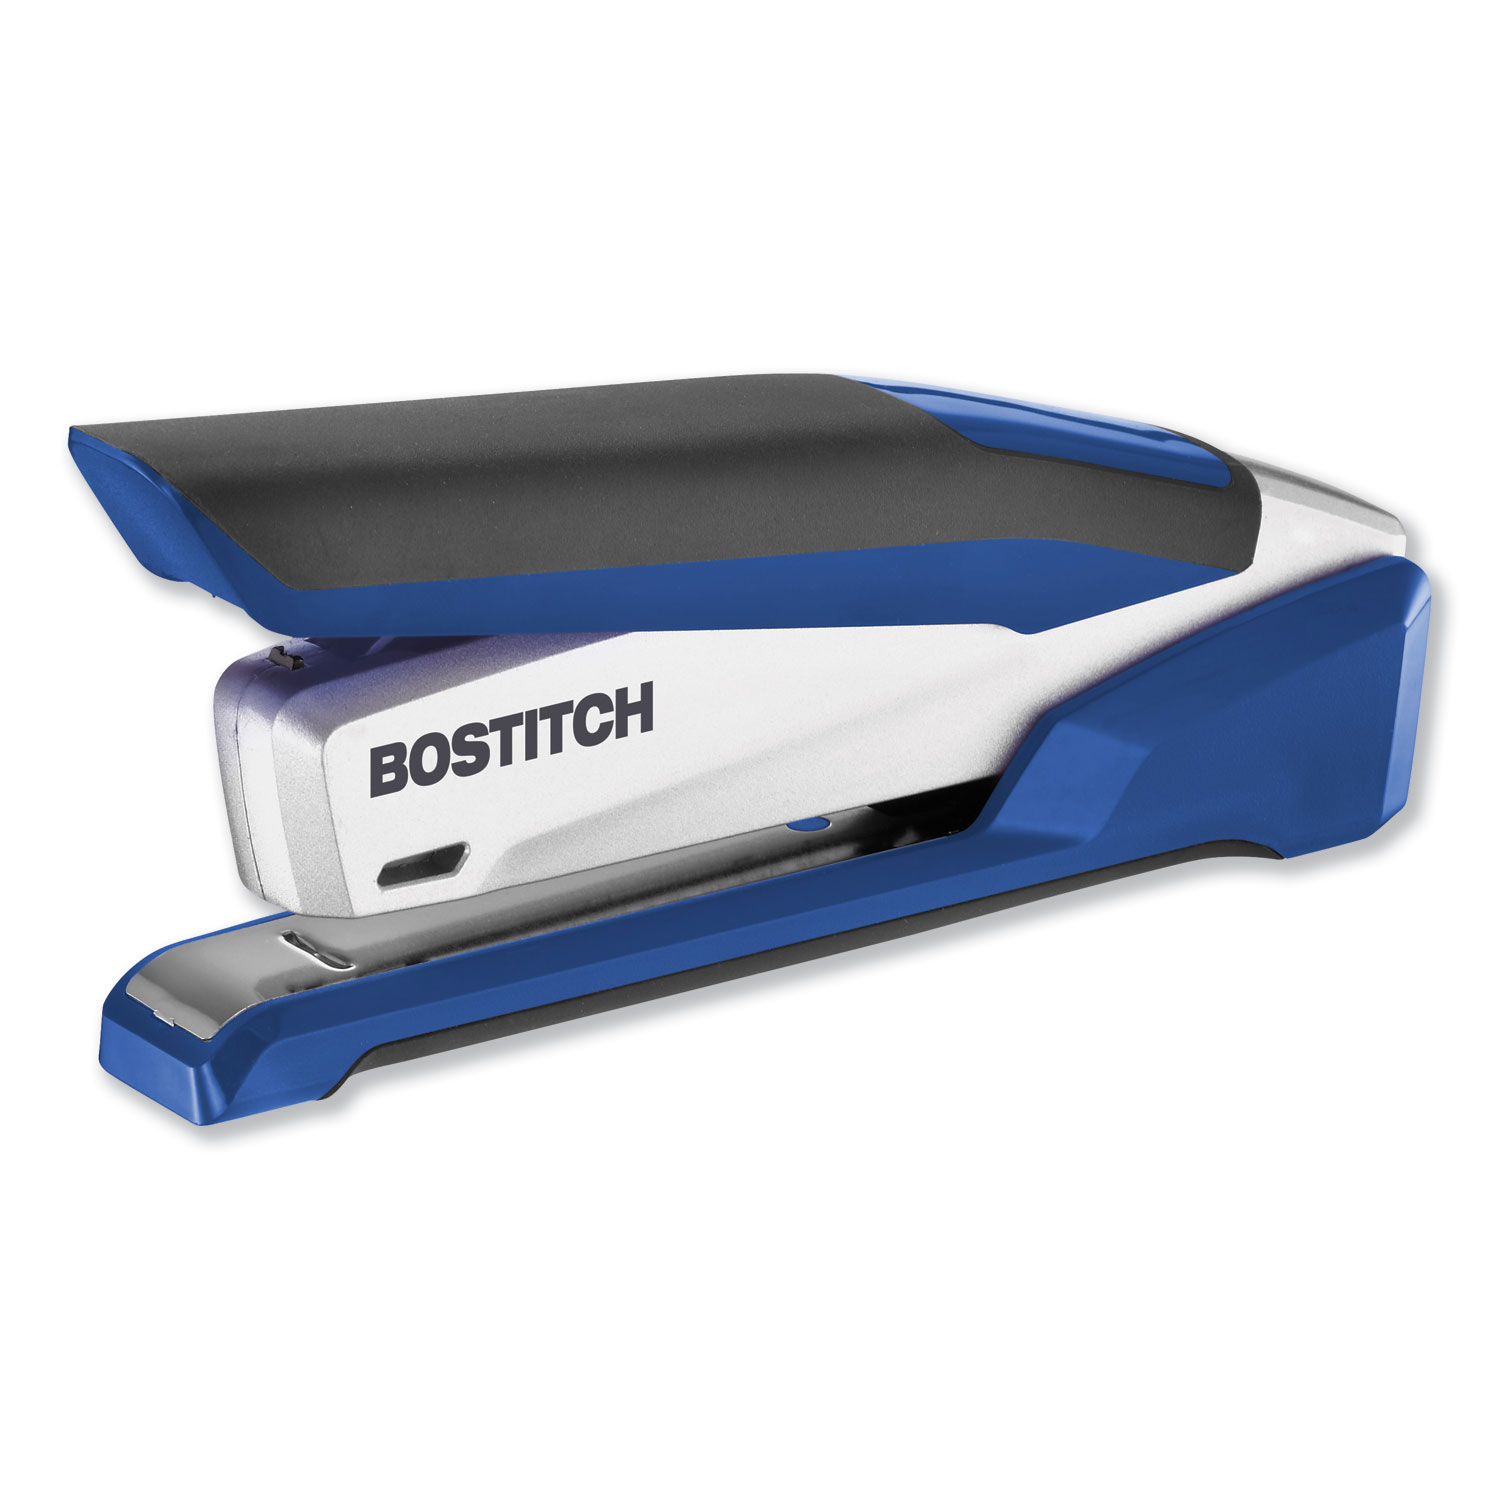  Bostitch 1118 InPower Spring-Powered Premium Desktop Stapler, 28-Sheet Capacity, Blue/Silver (ACI1118) 